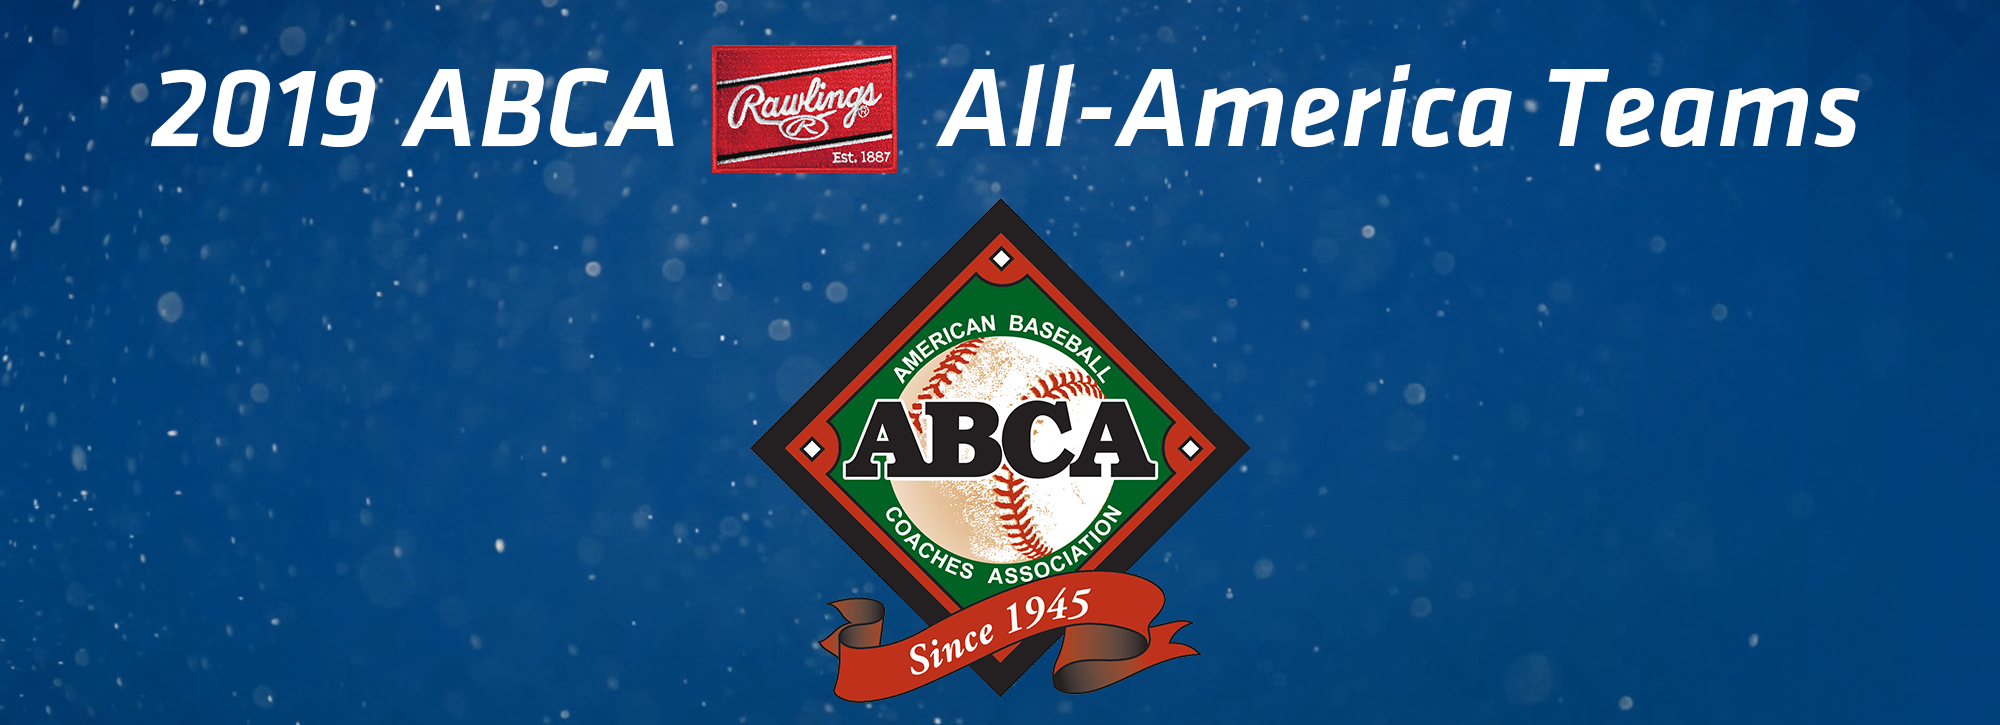 2019 ABCA/Rawlings NCAA Div. II All-America Teams announced